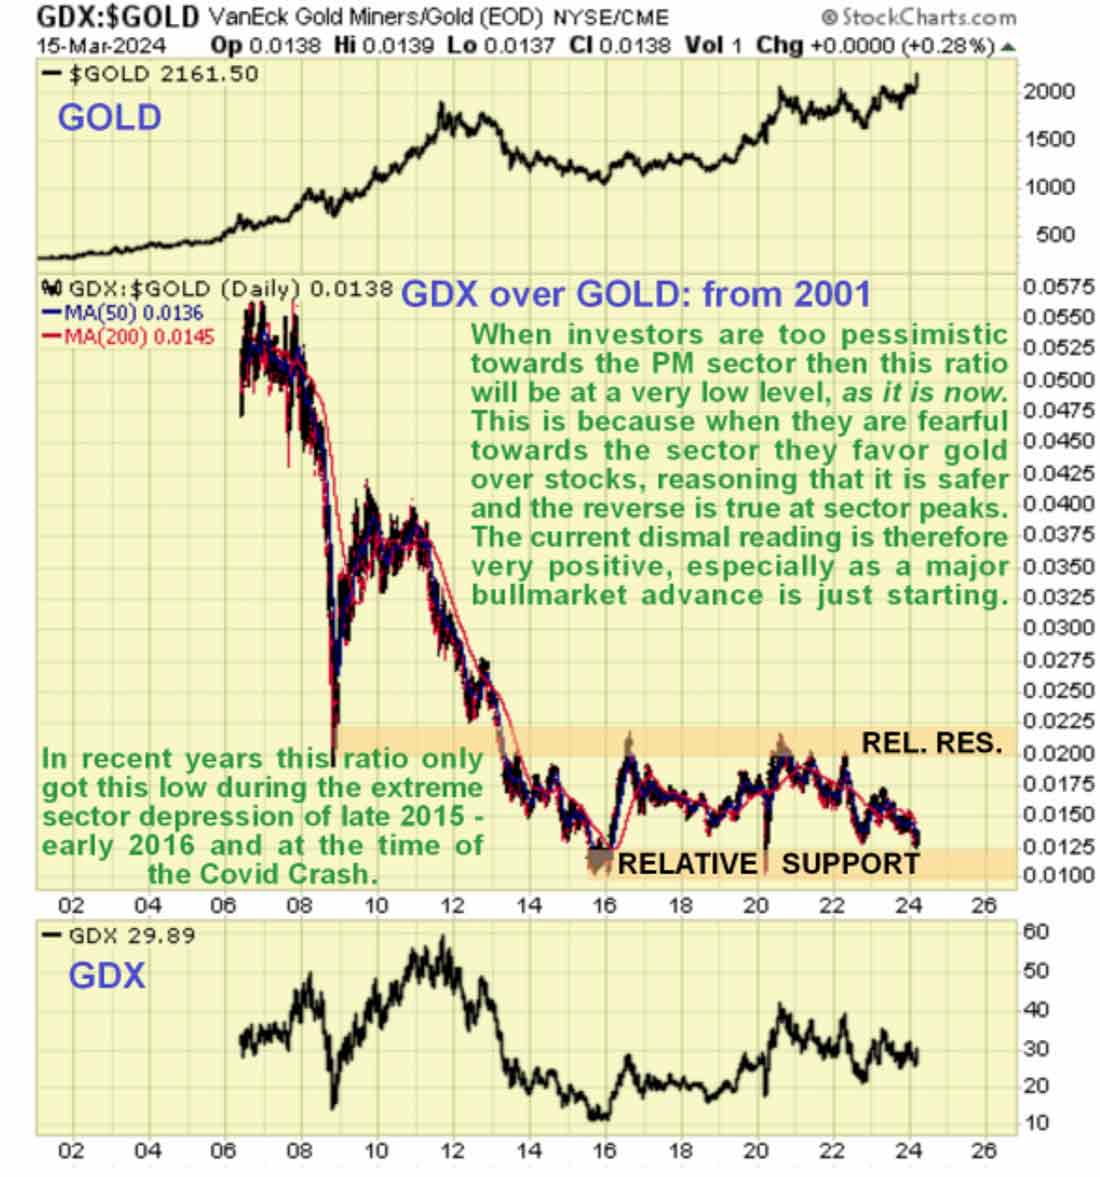 динамика индекса GDX и цен на золото